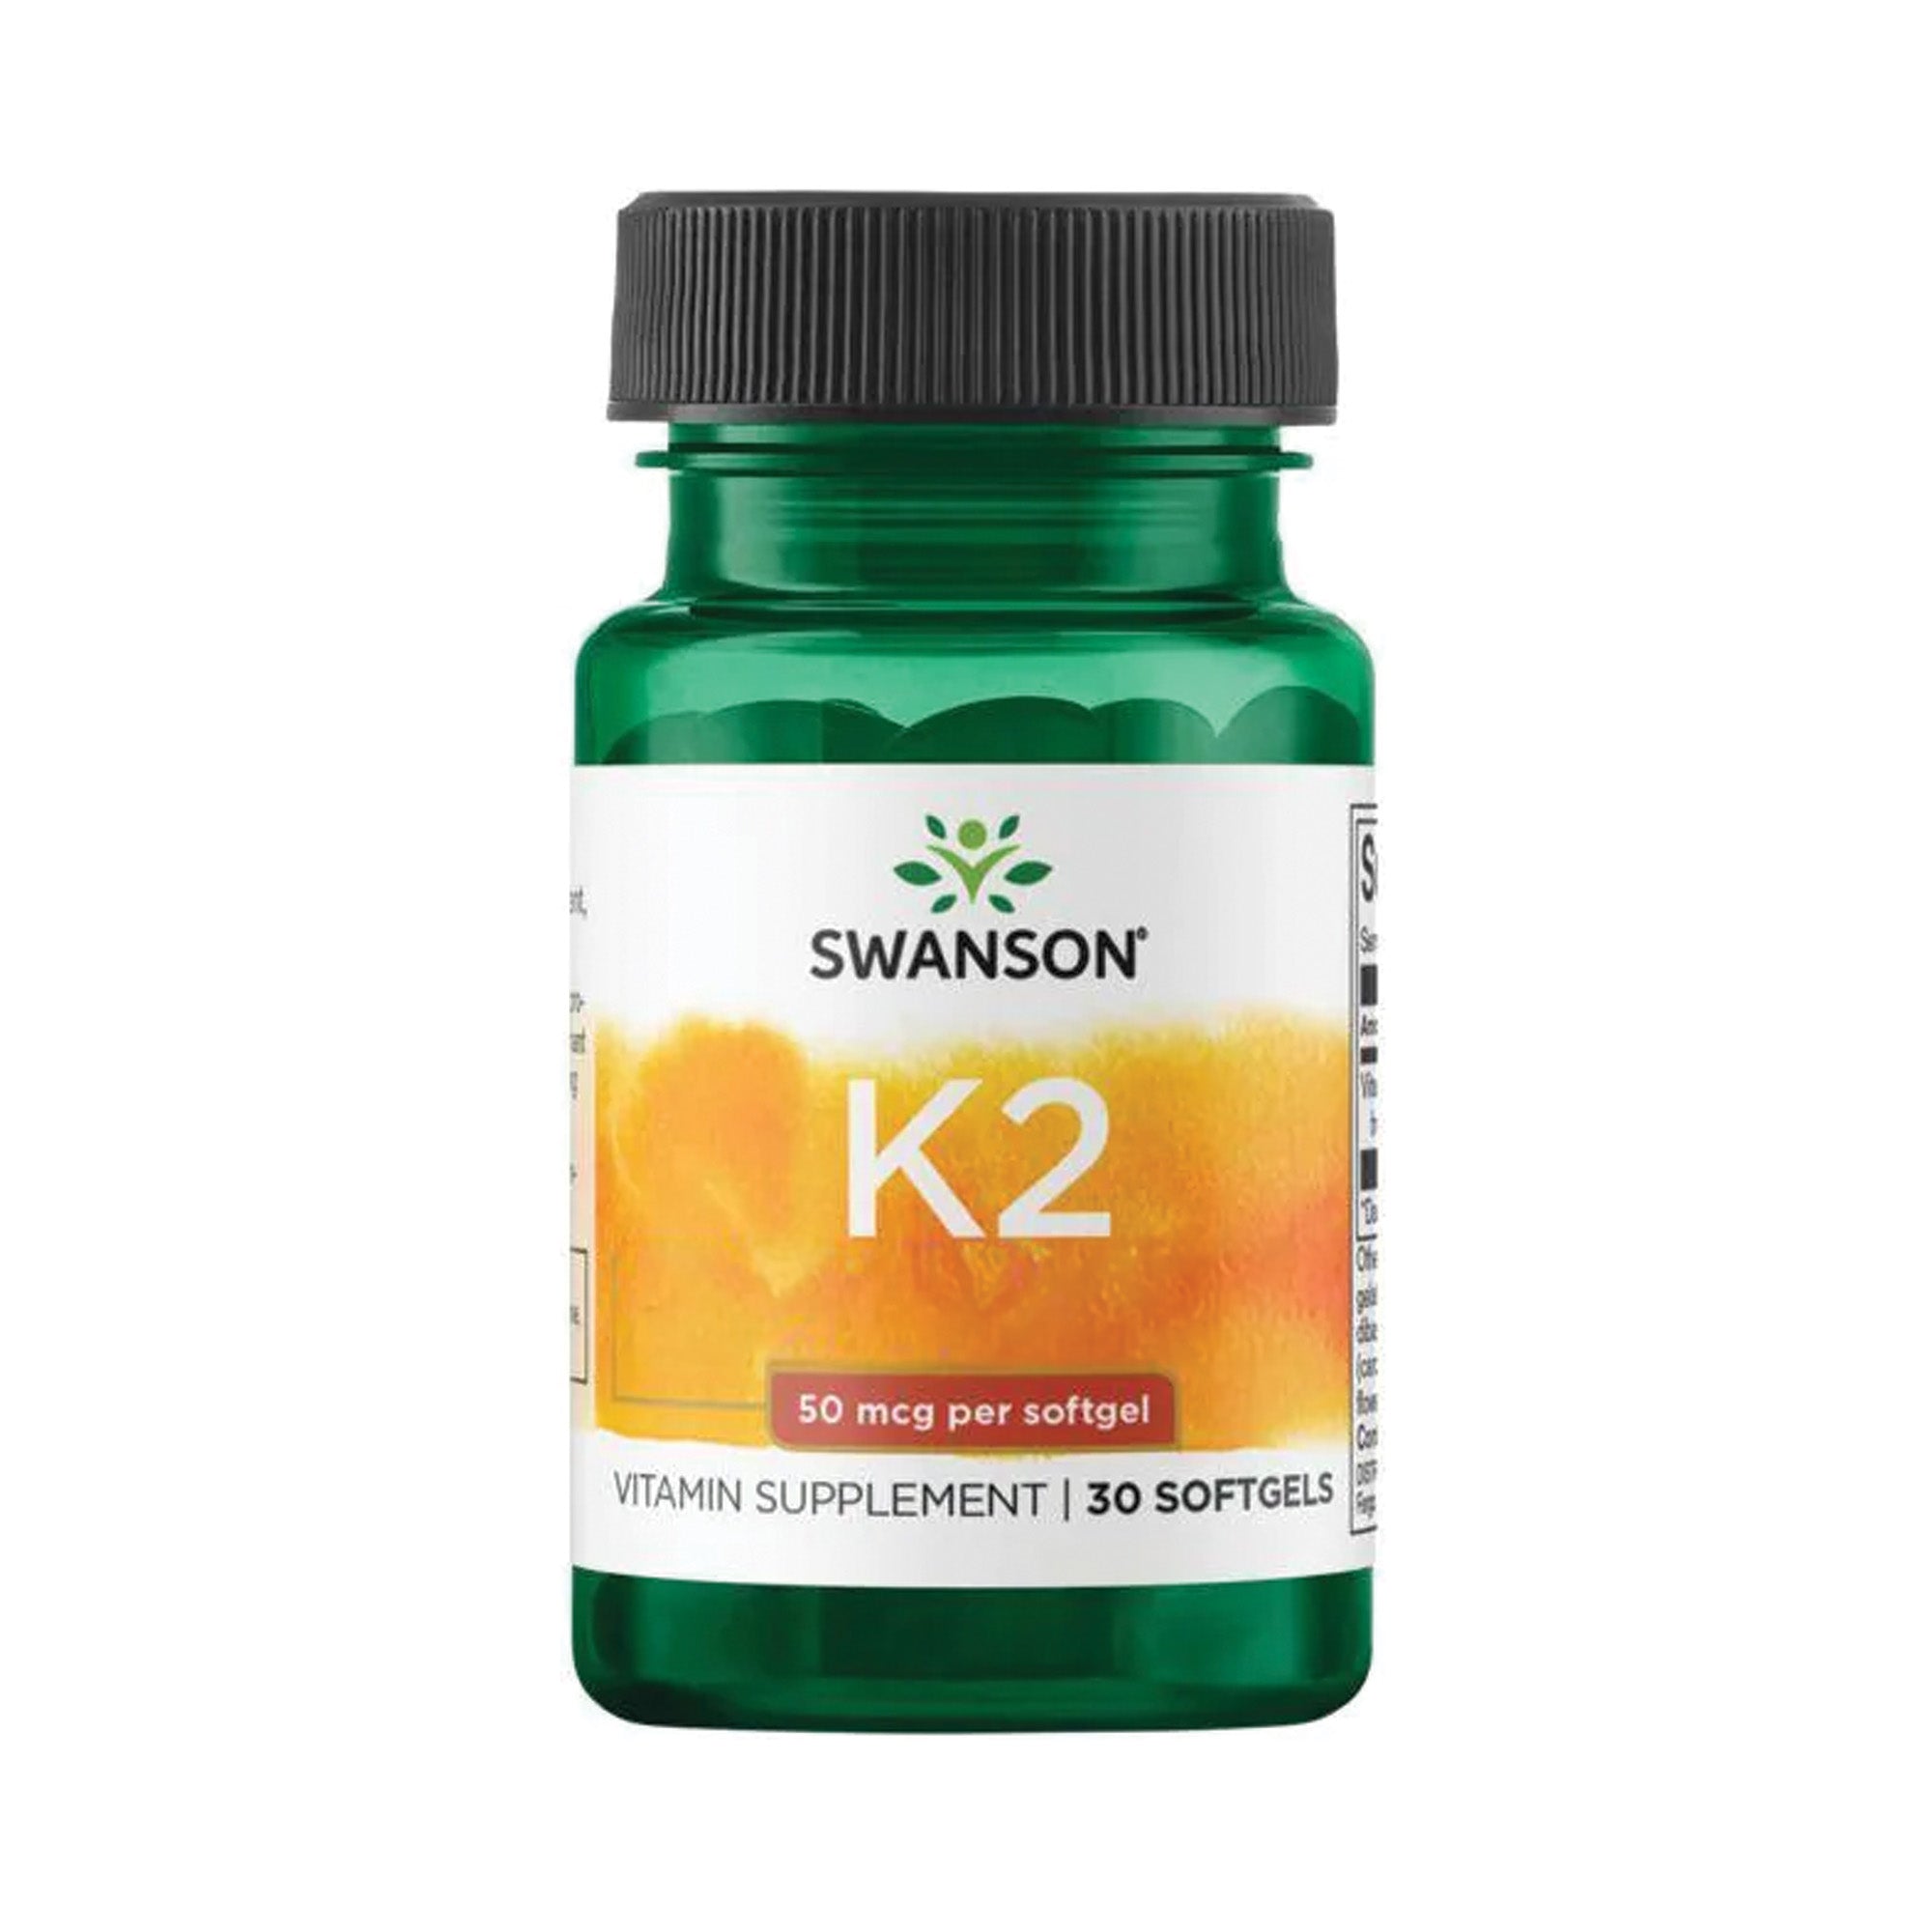 Swanson vitamine k2 50 mcg